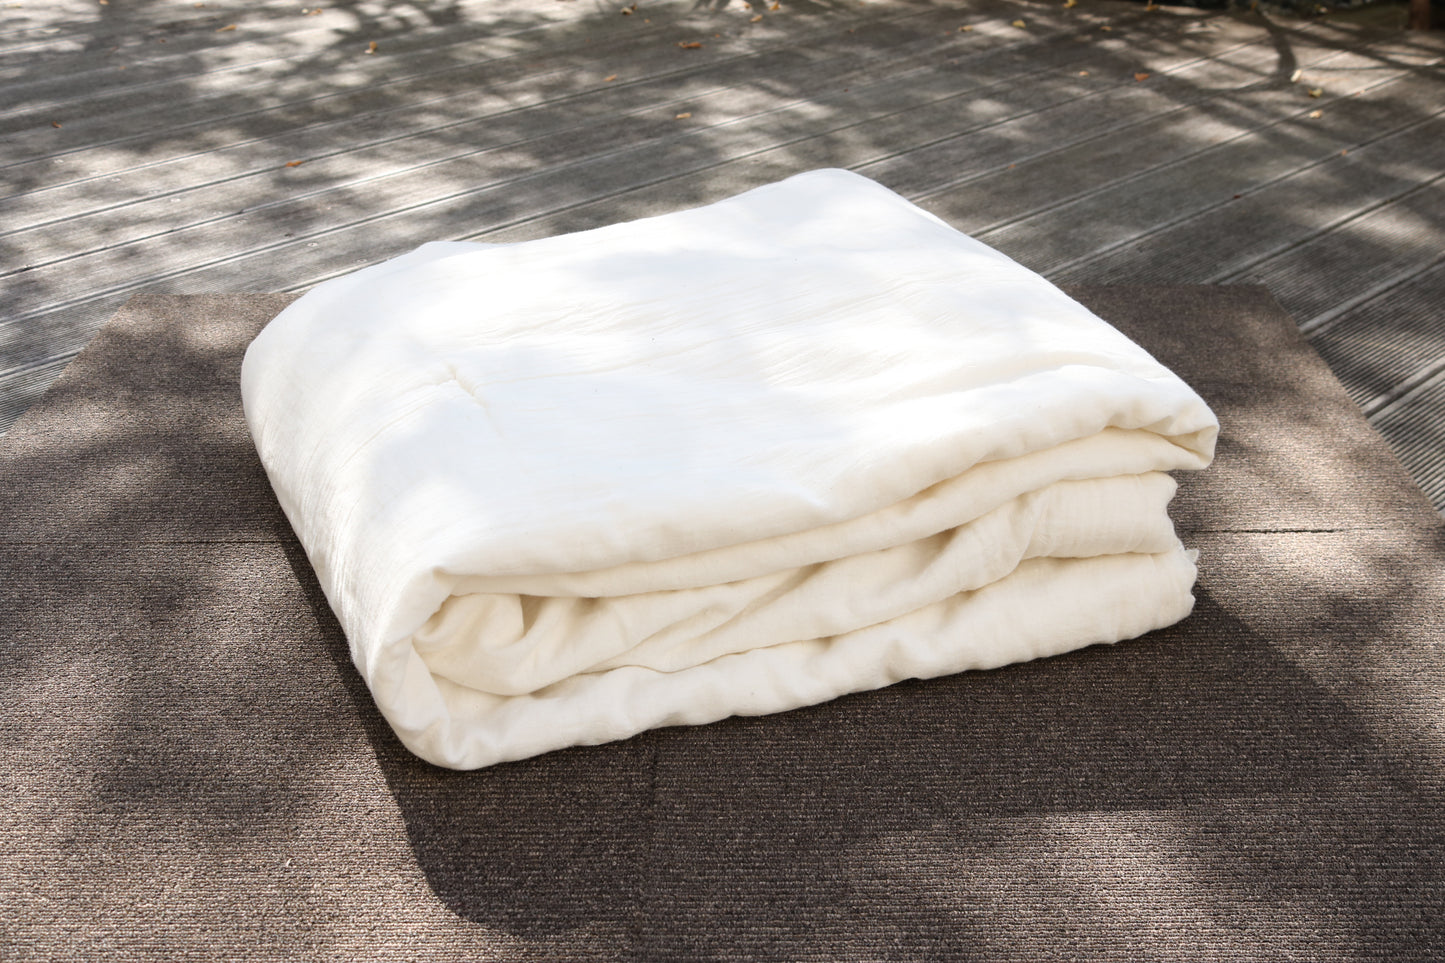 Cotton comforter 0.5kg/1.0kg